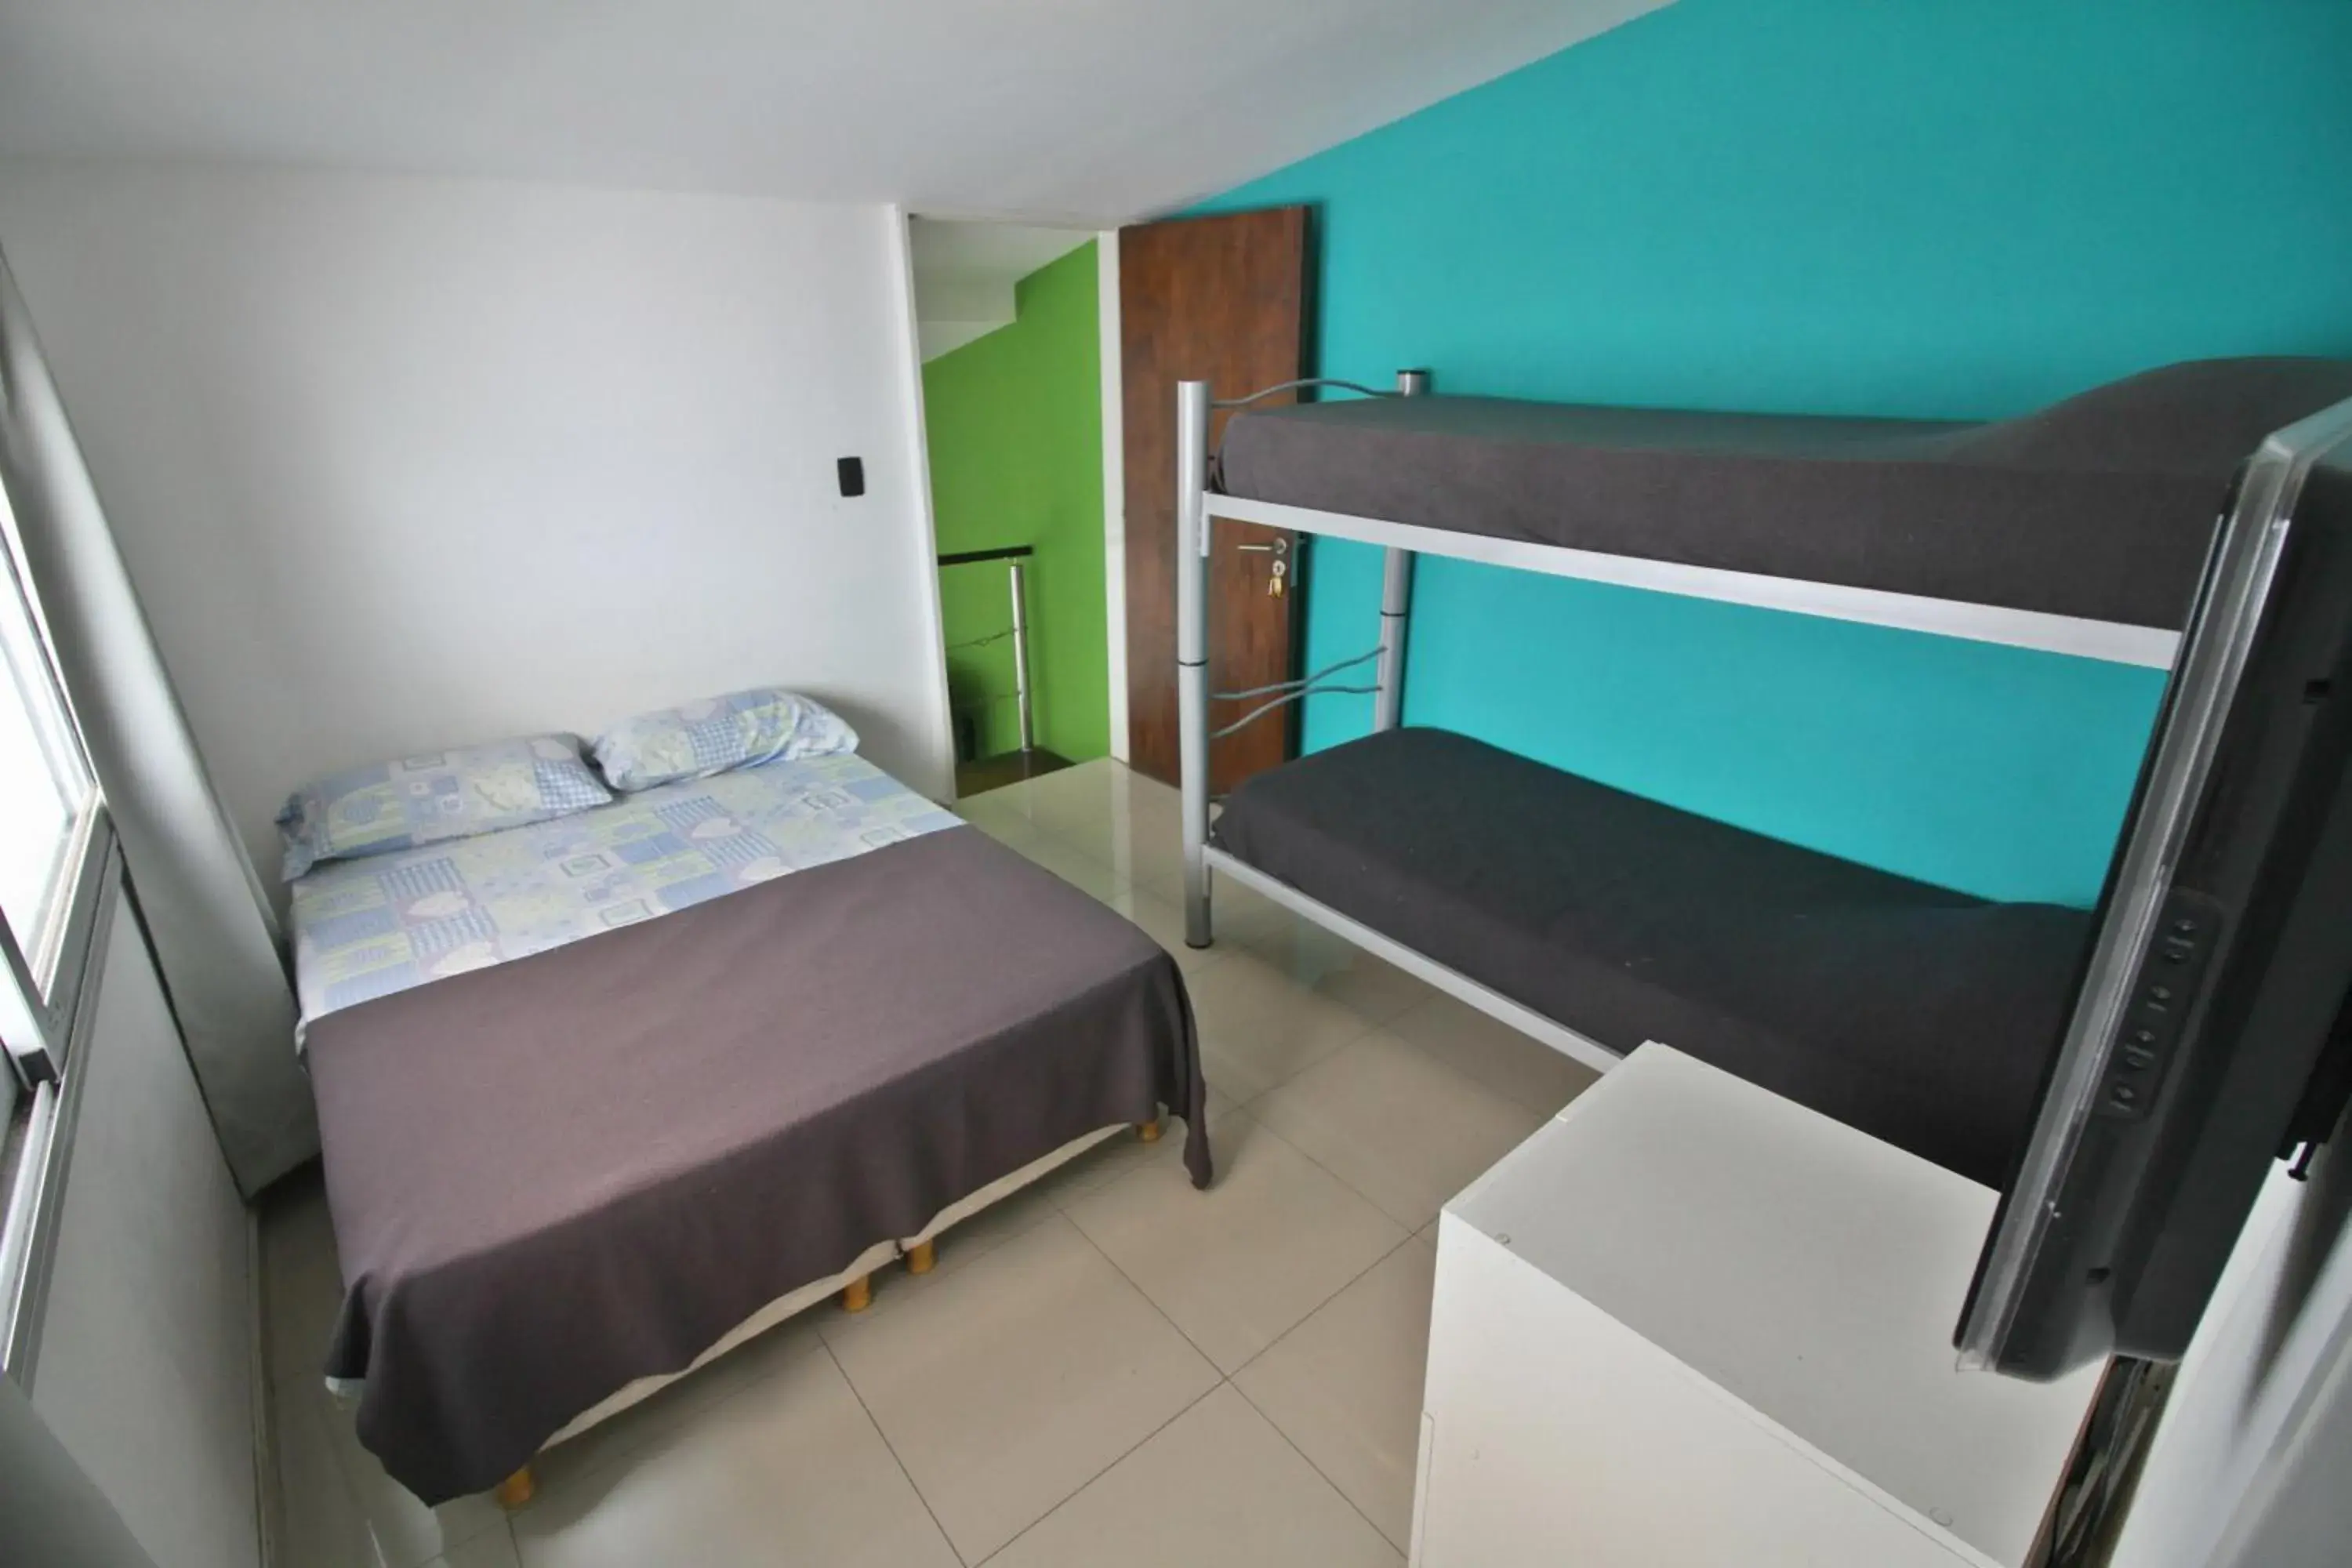 Bedroom, Bunk Bed in Link Cordoba Hostel